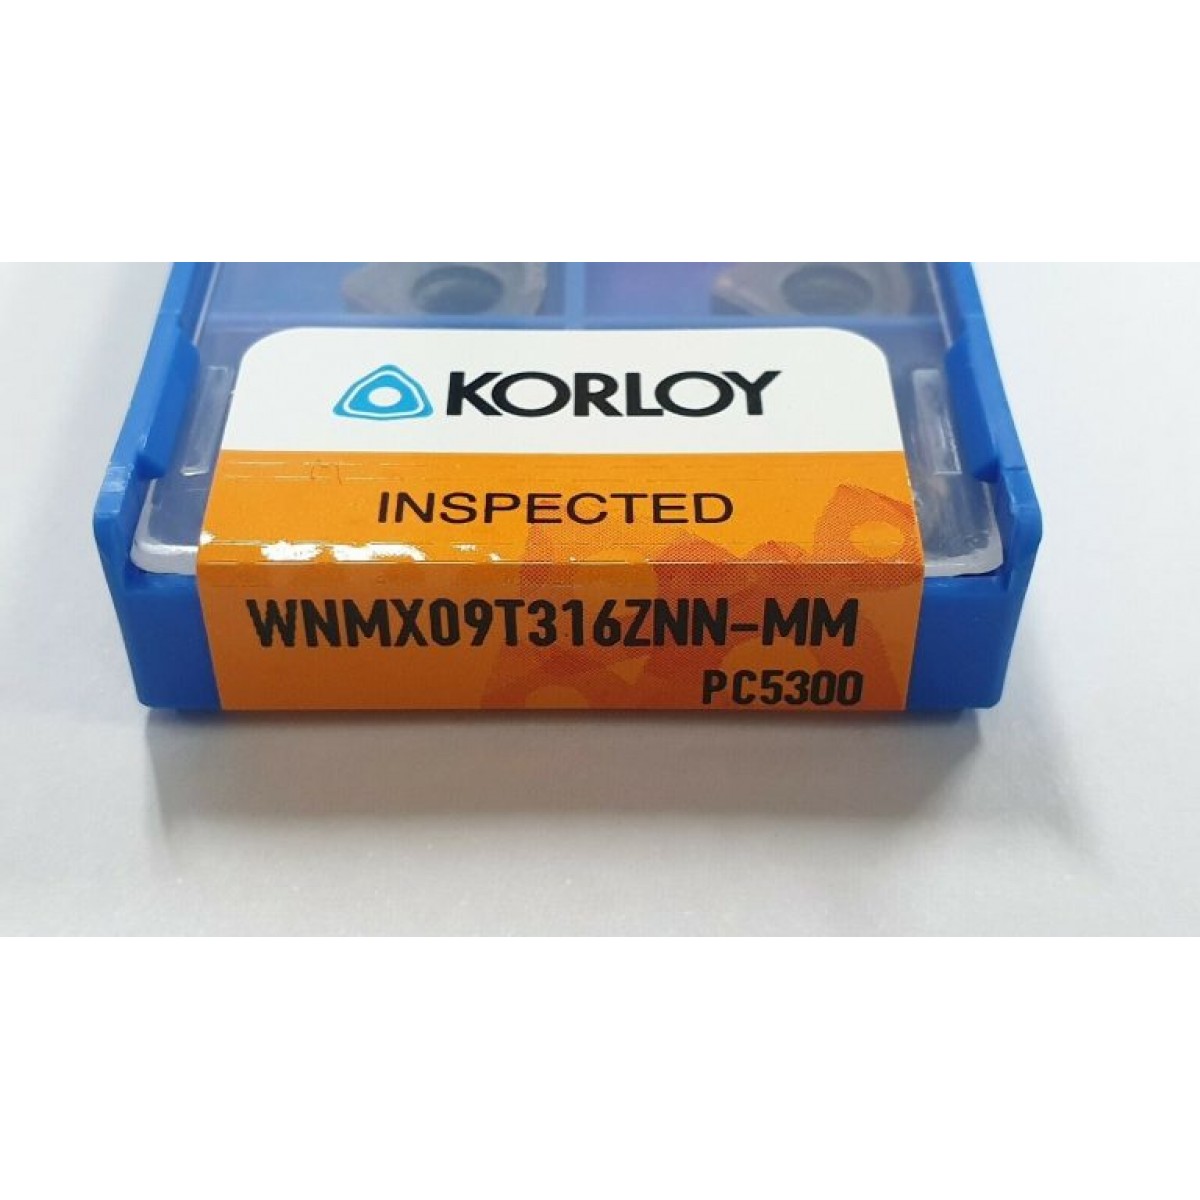 KORLOY - WNMX09T316ZNN-MM PC5300